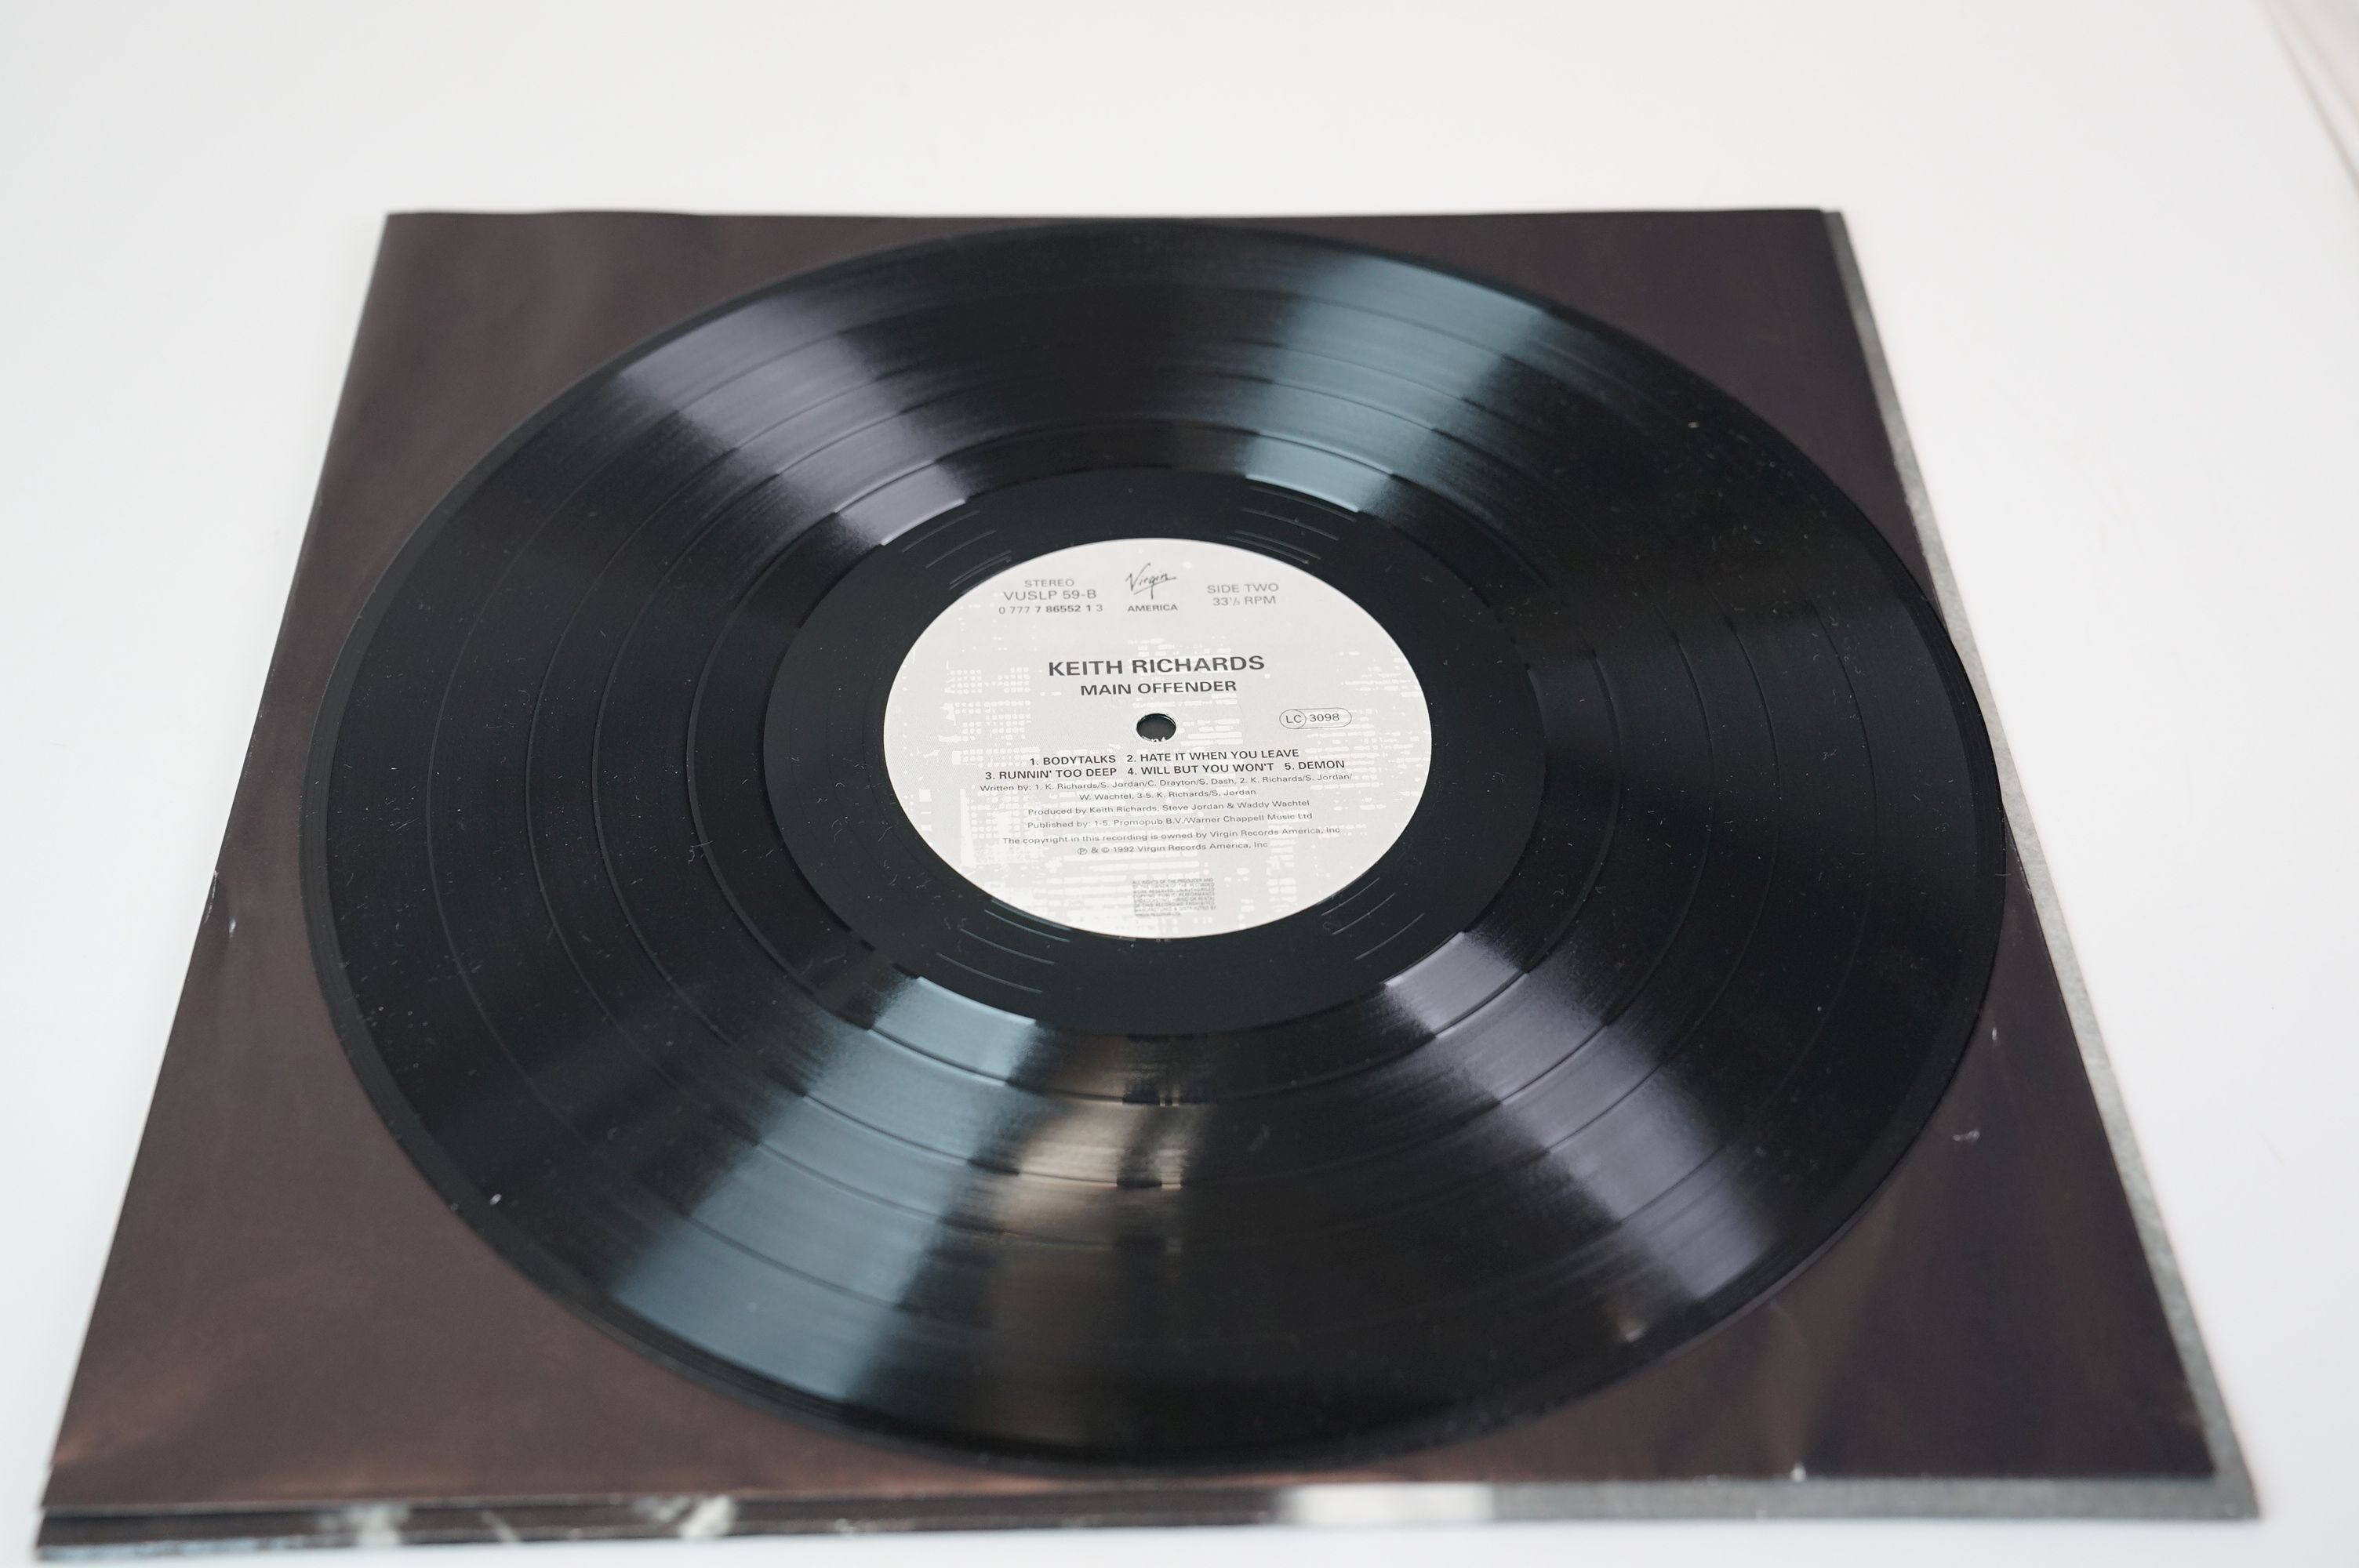 Vinyl - Keith Richards Main Offender LP on Virgin VUSLP 59 with inner, excellent - Image 5 of 8